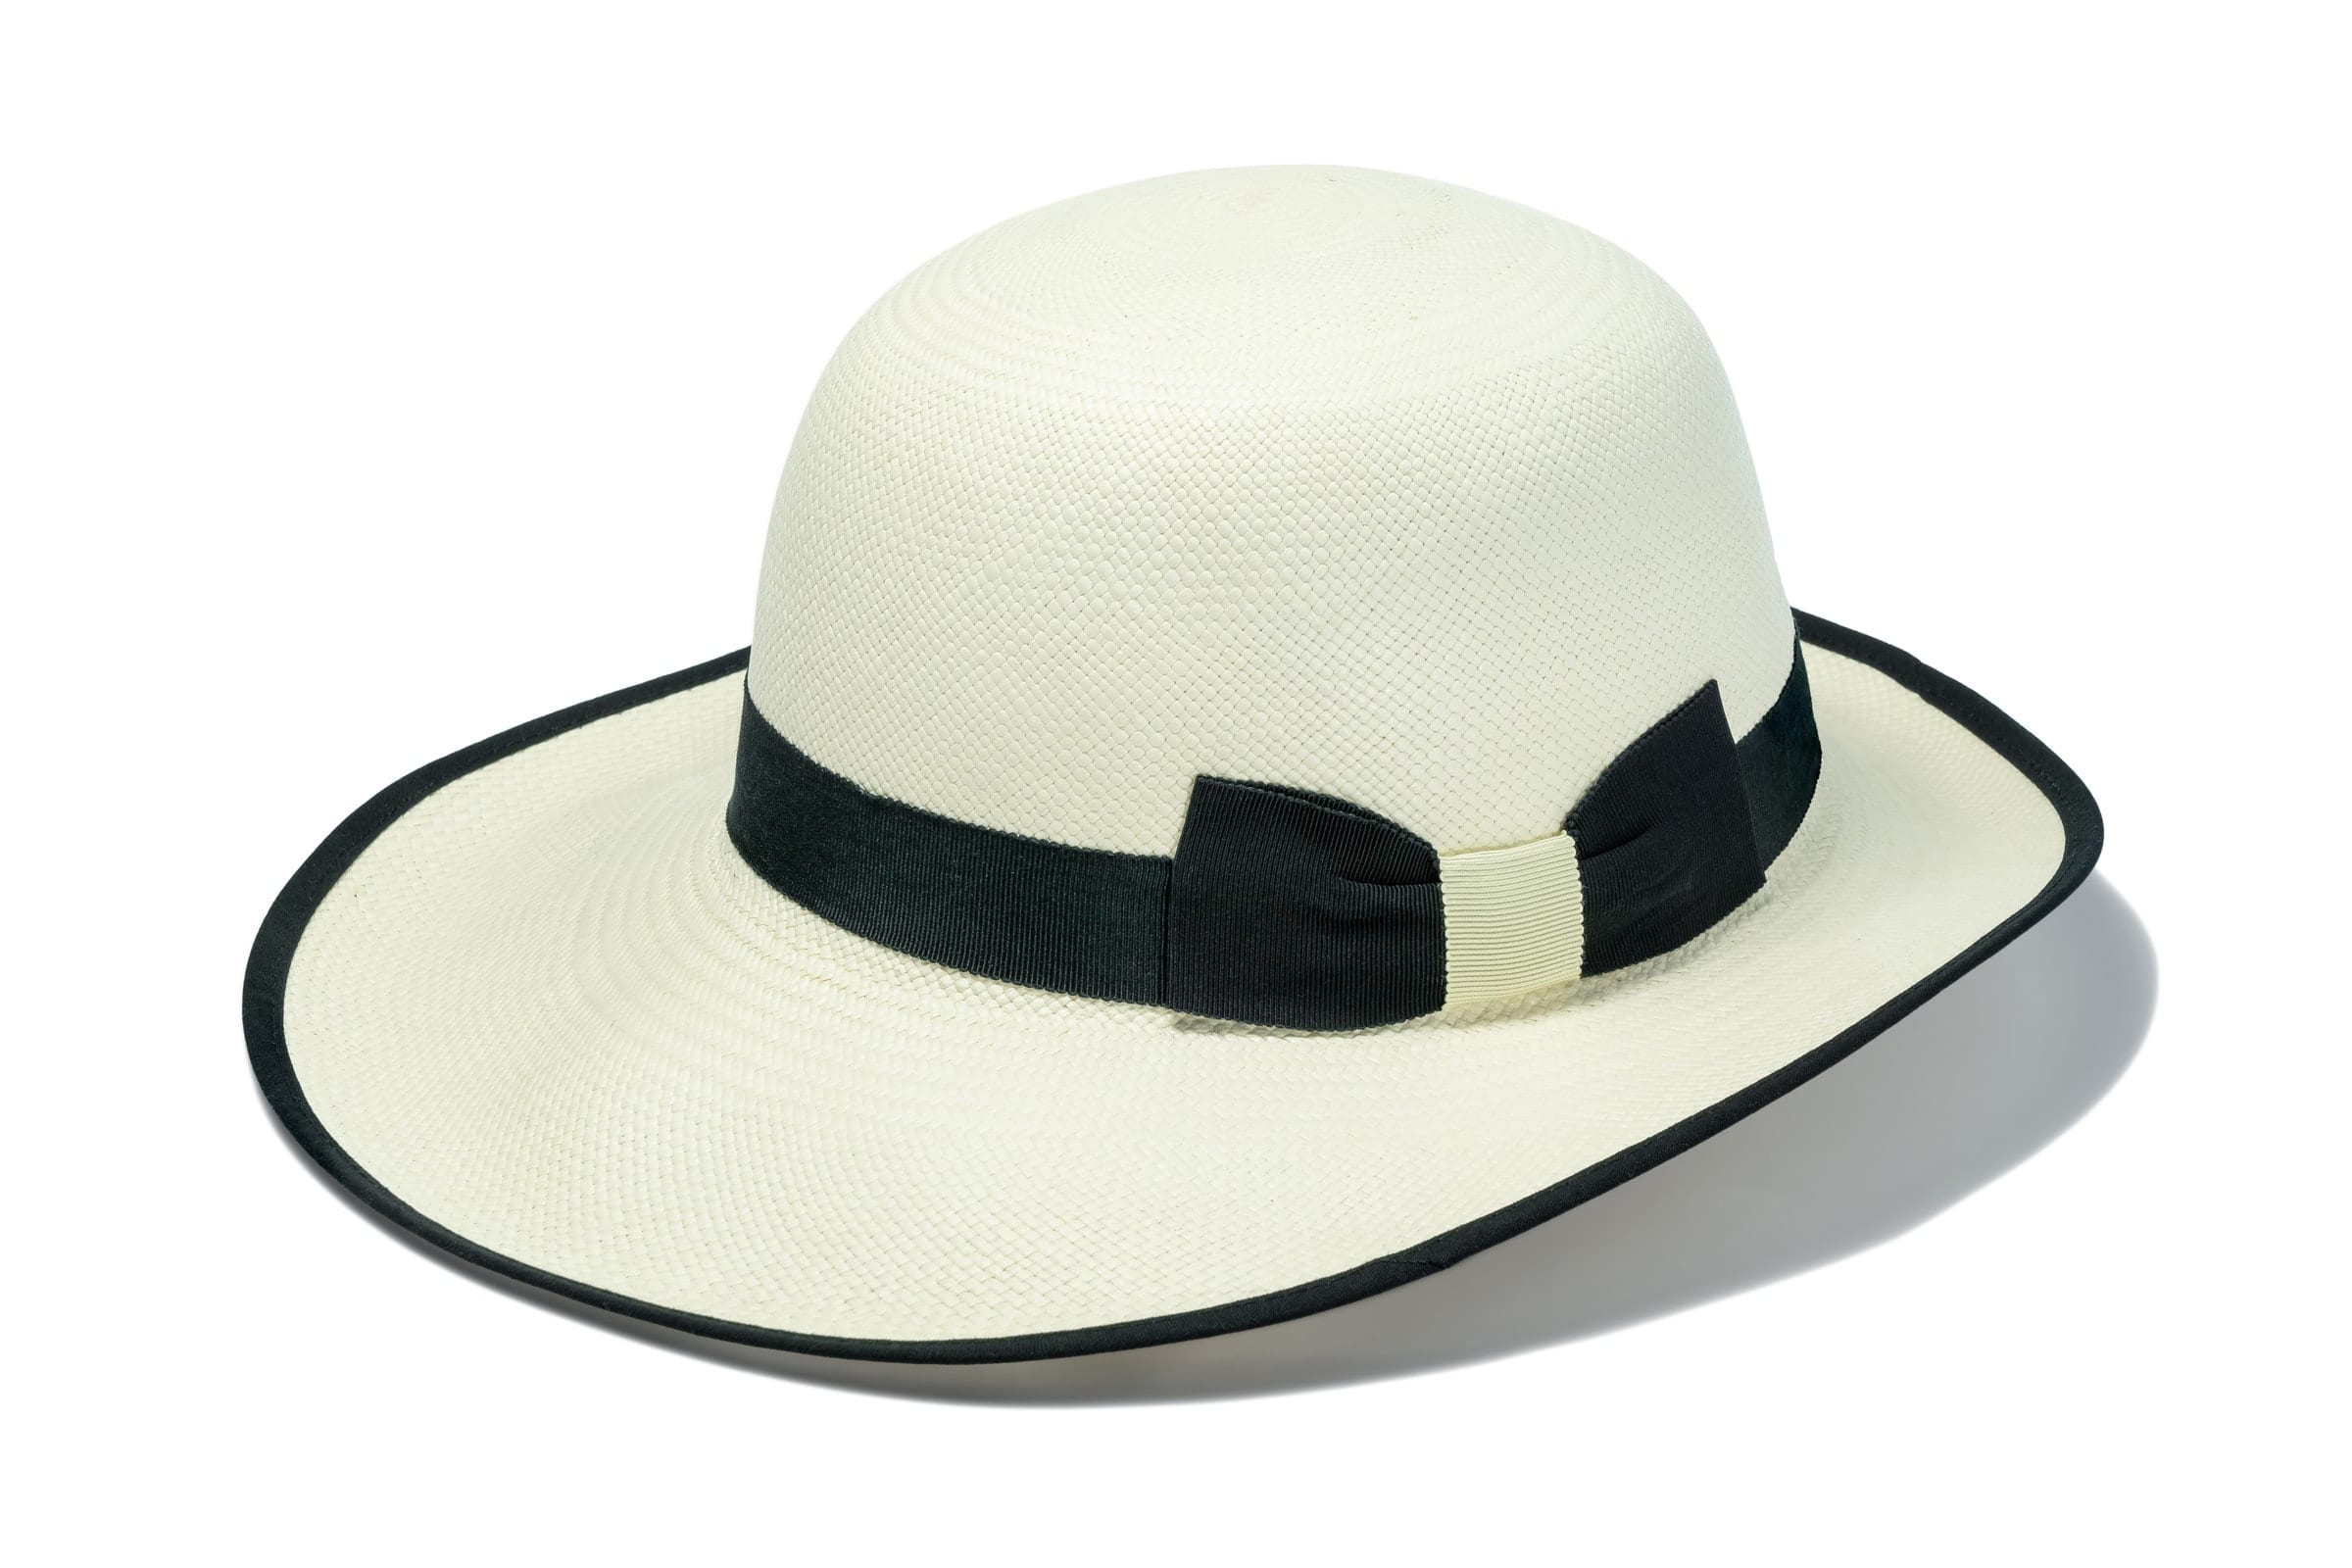 CHELSEA IVORY-Women handmade Panama Hats